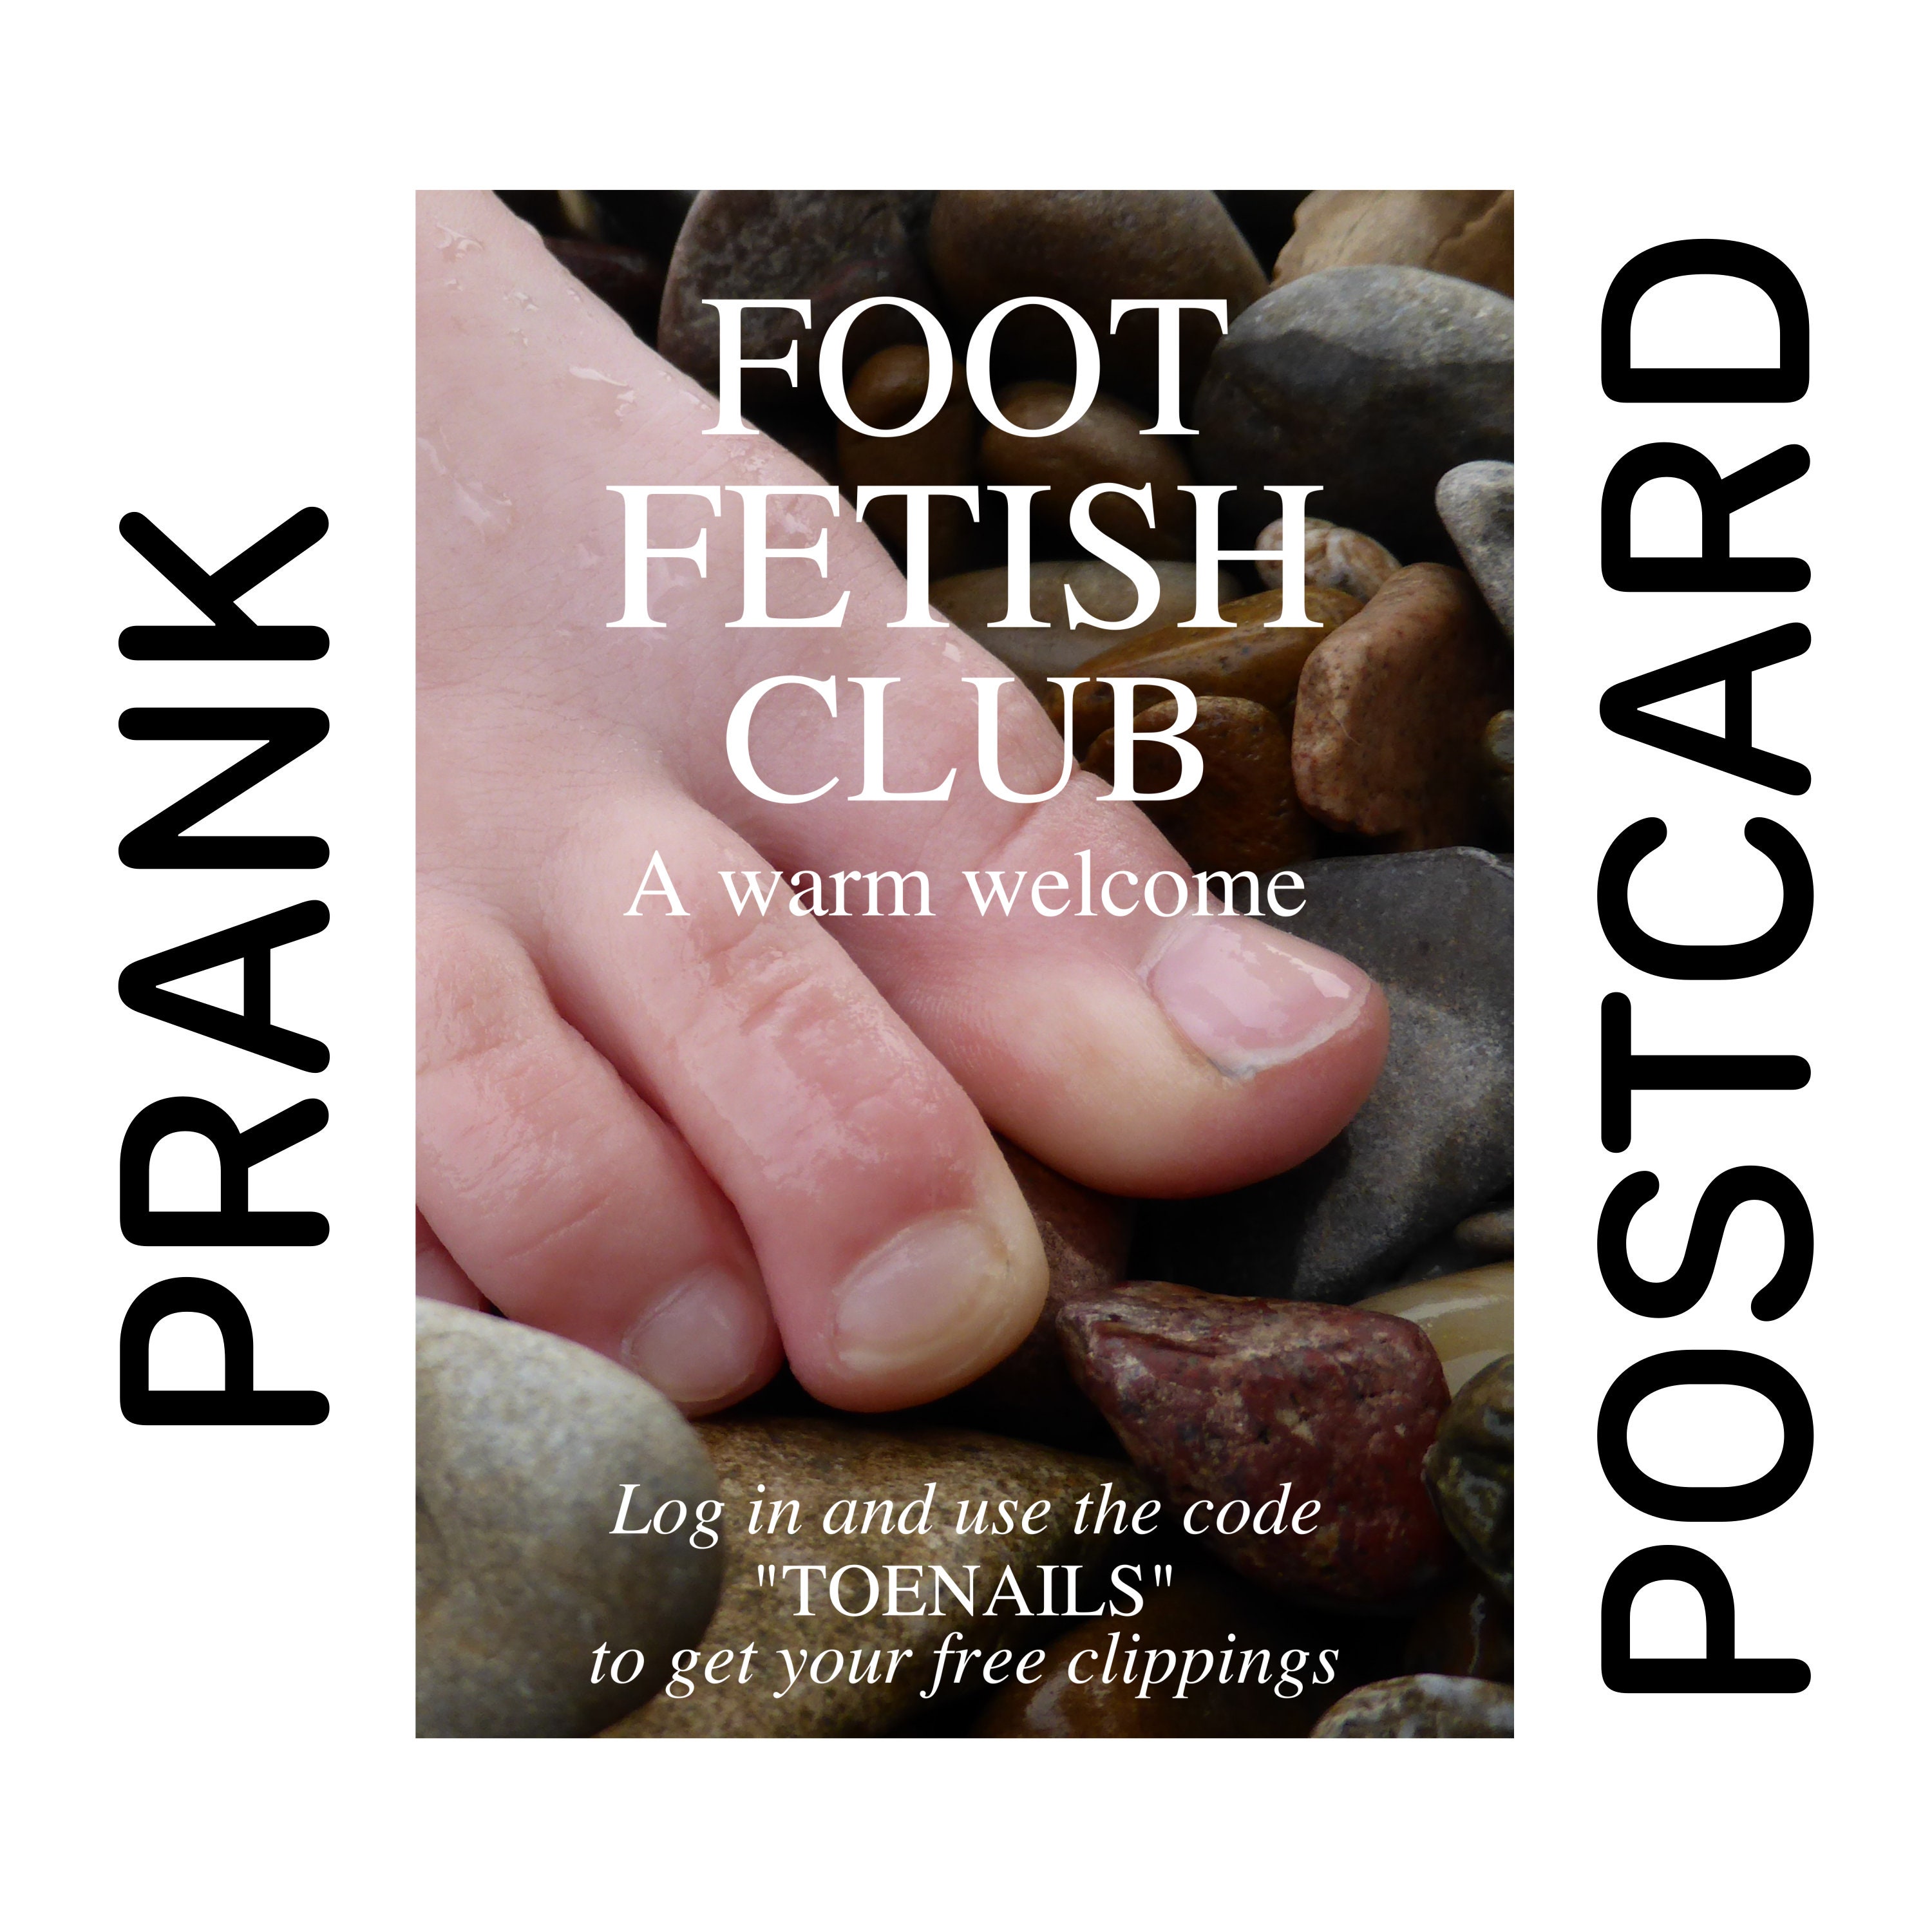 Footfetish club